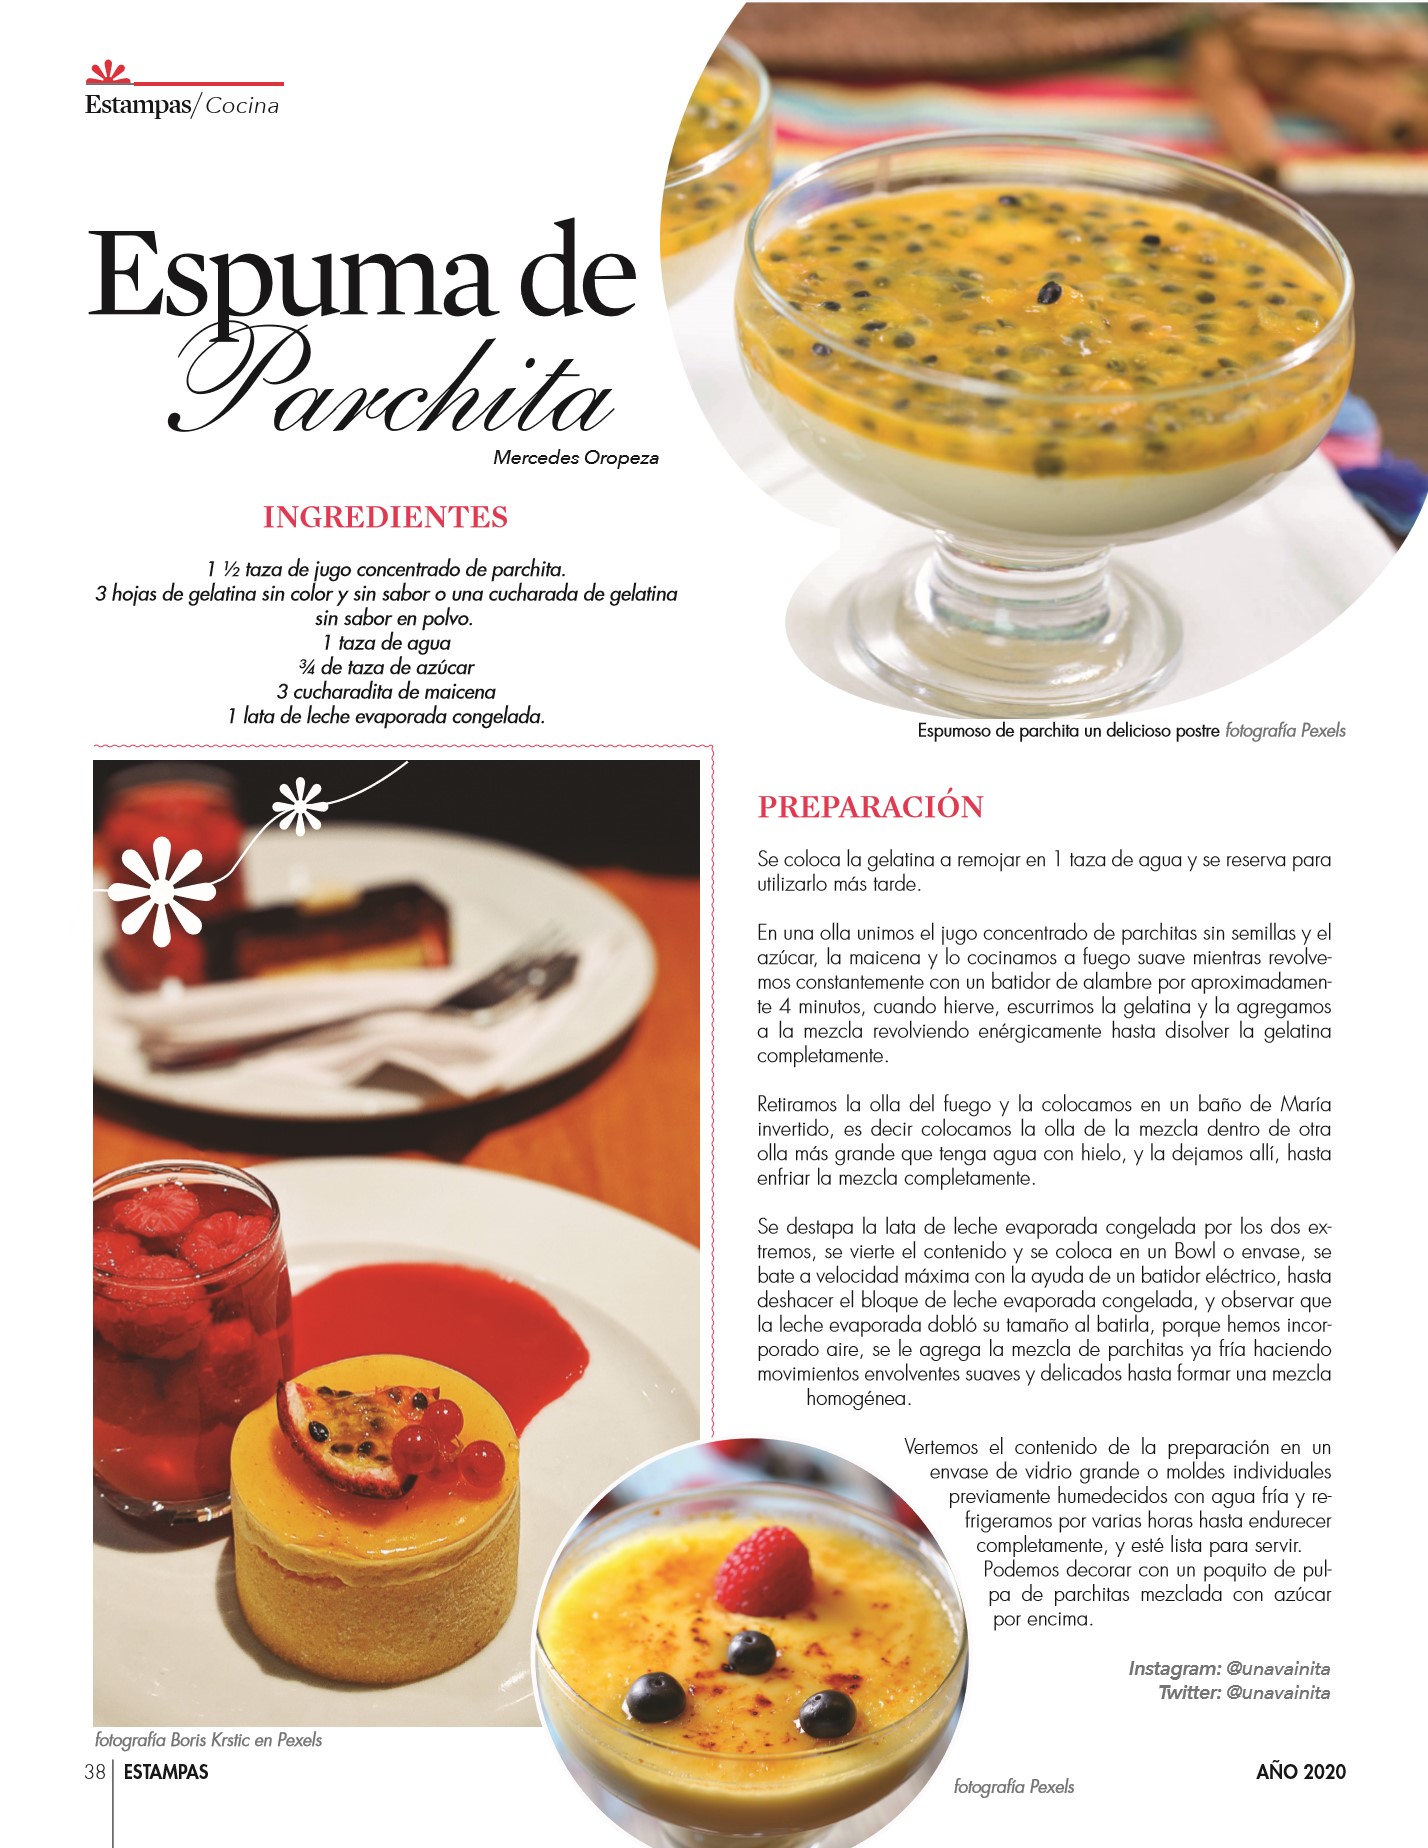 41-REV Gastronomía:   Mercedes Oropeza: Espuma de parchita